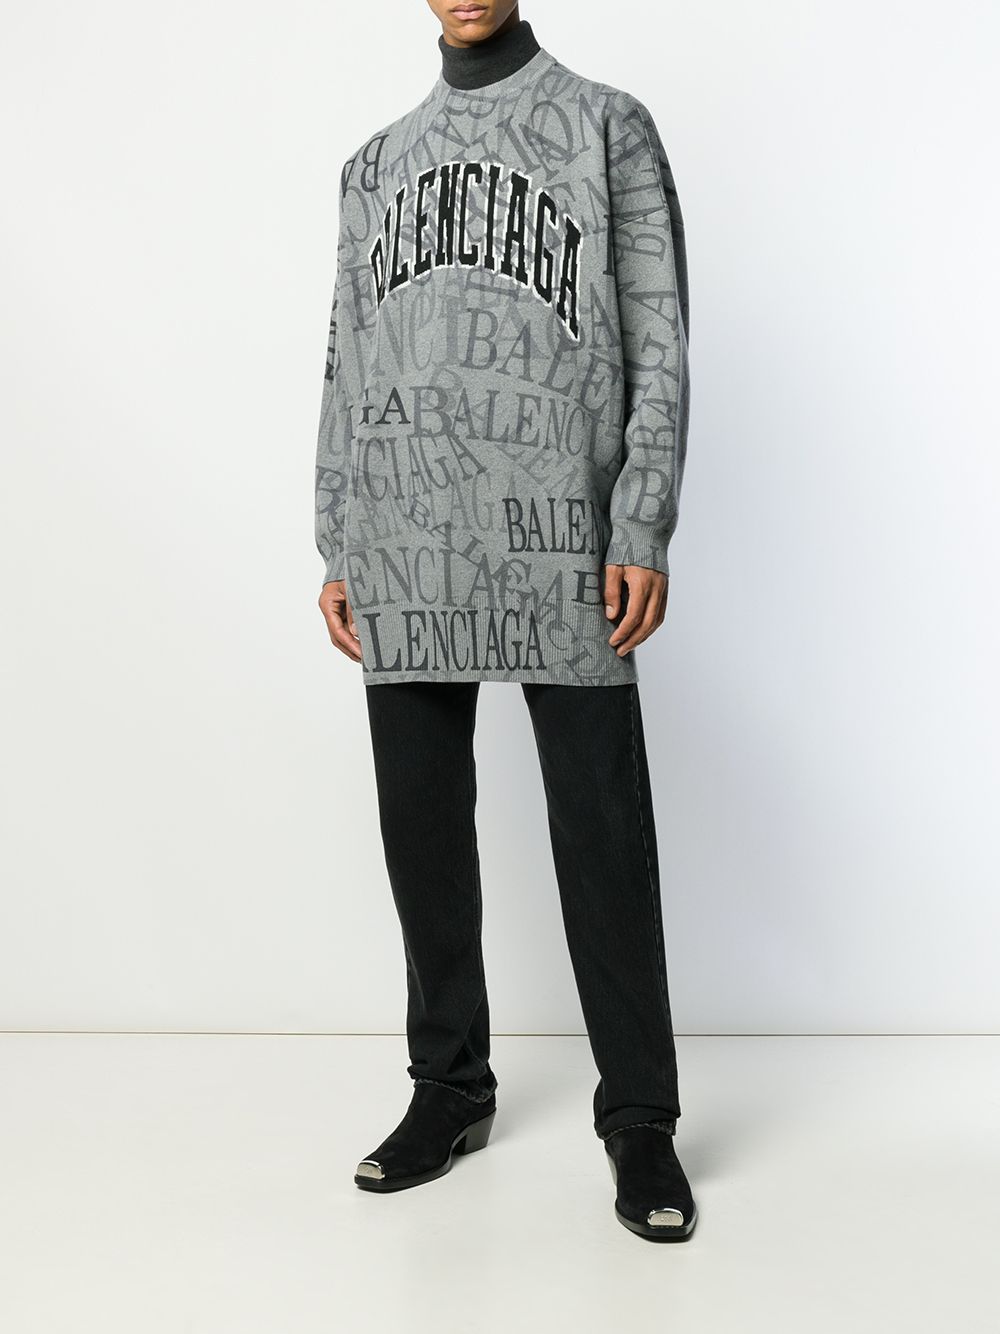 фото Balenciaga свитер greyscale